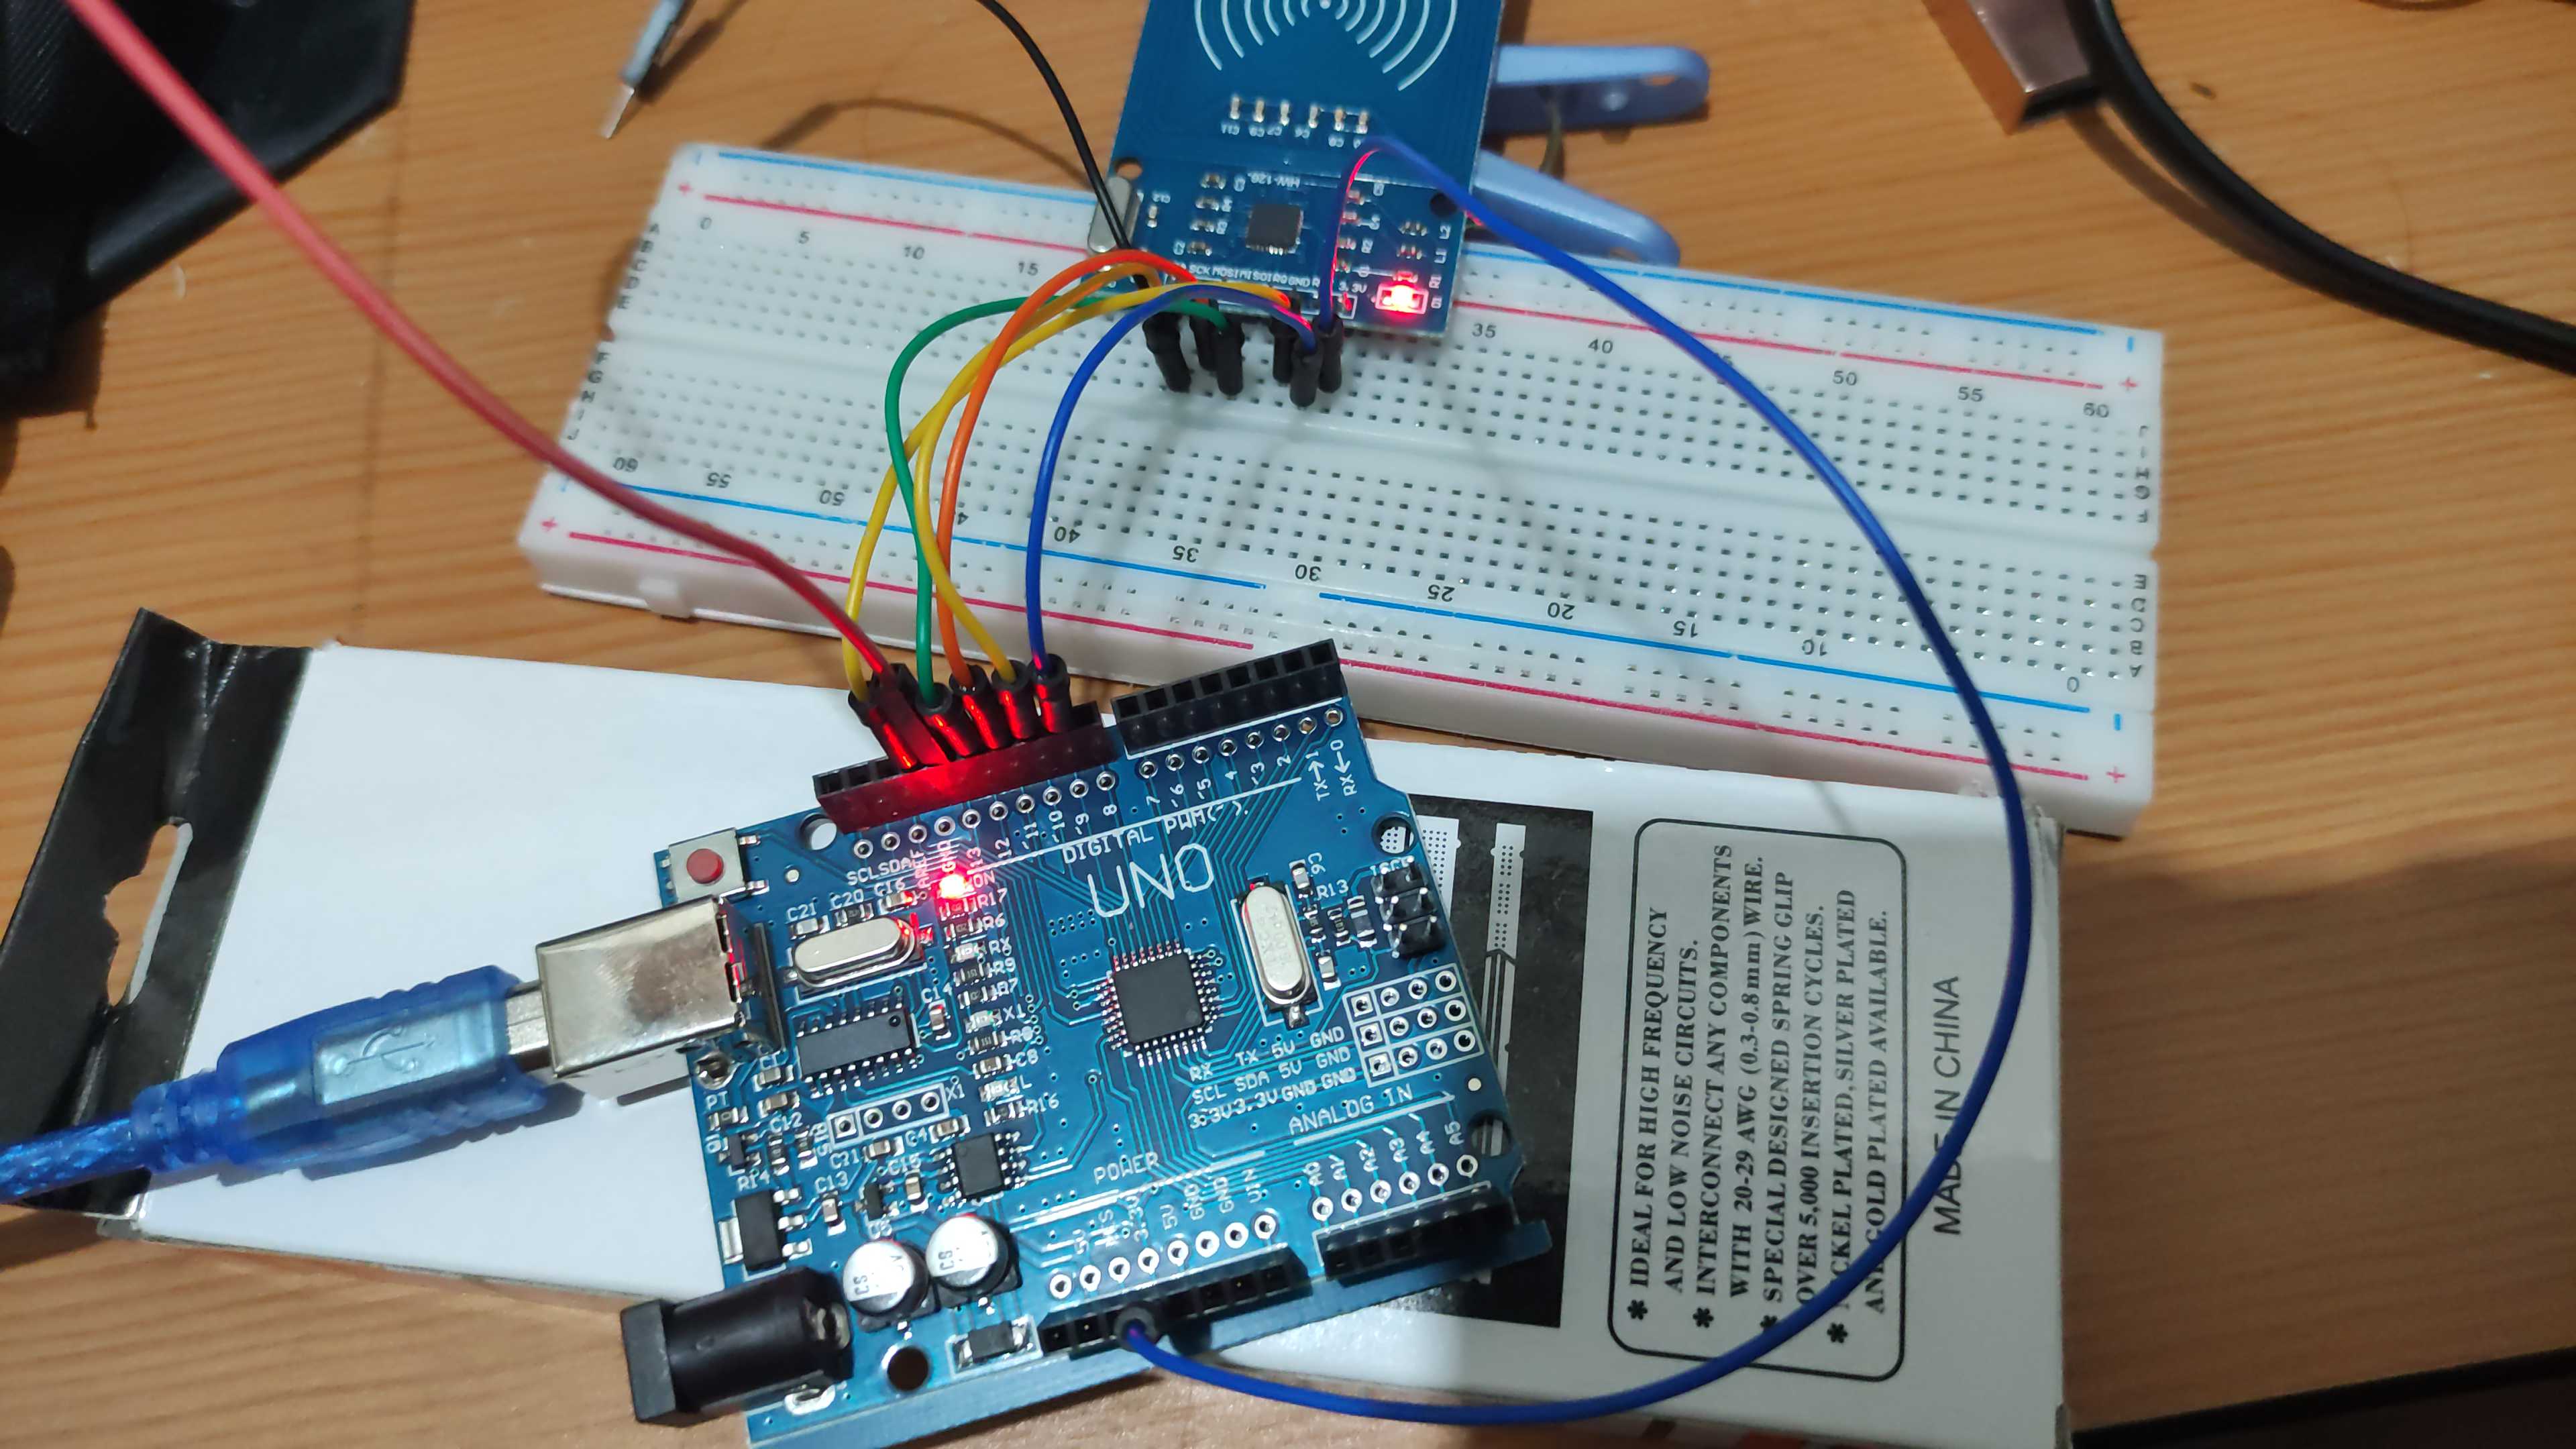 Duplikat kartu RFID menggunakan Arduino